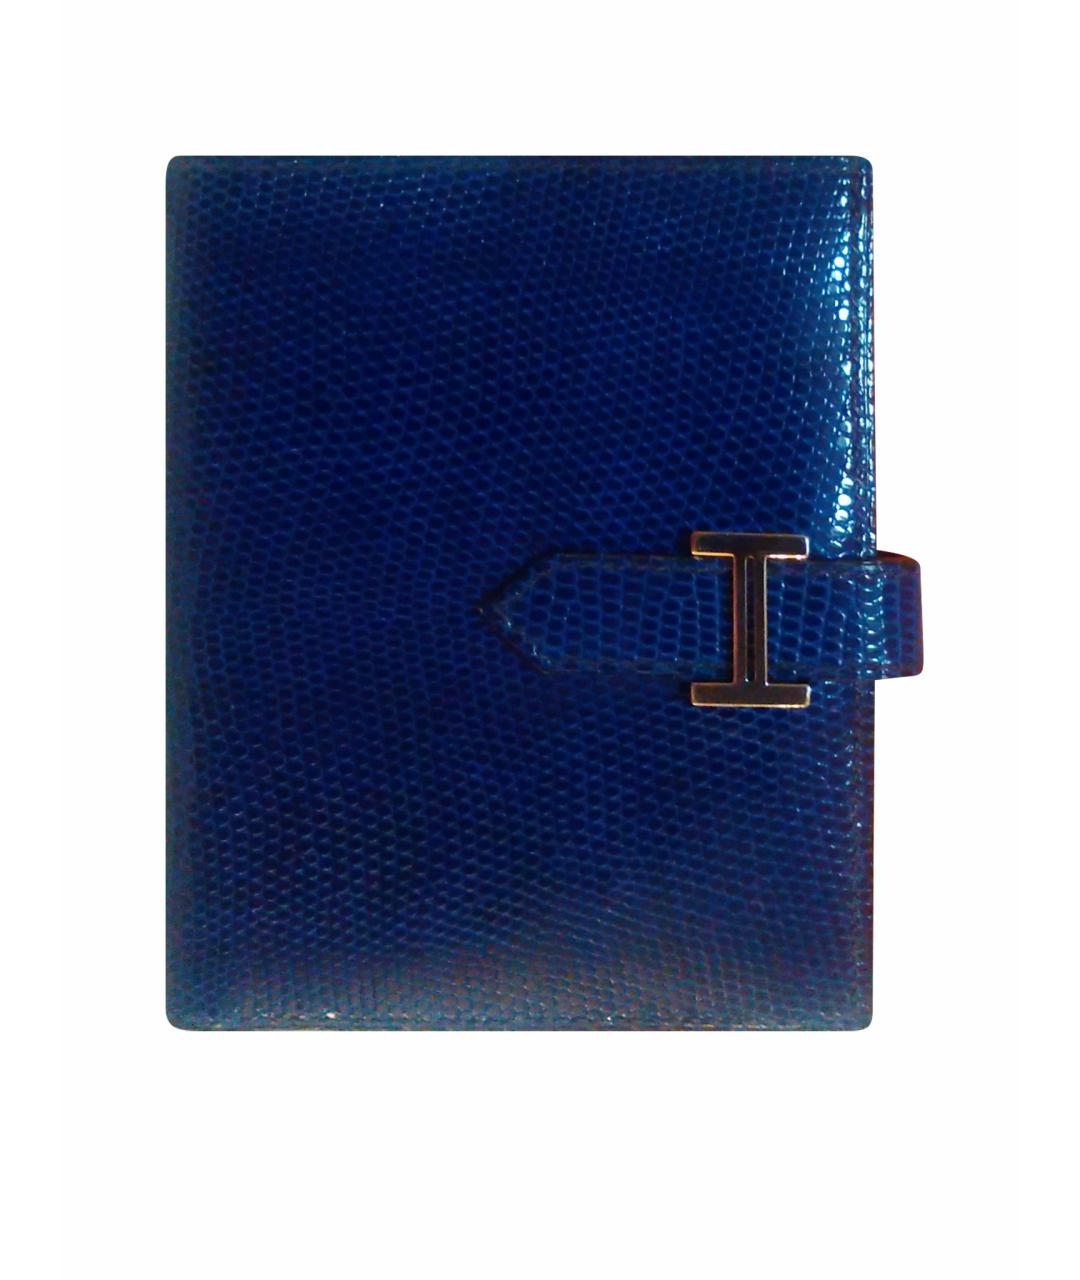 HERMES PRE-OWNED Синий кошелек из экзотической кожи, фото 1